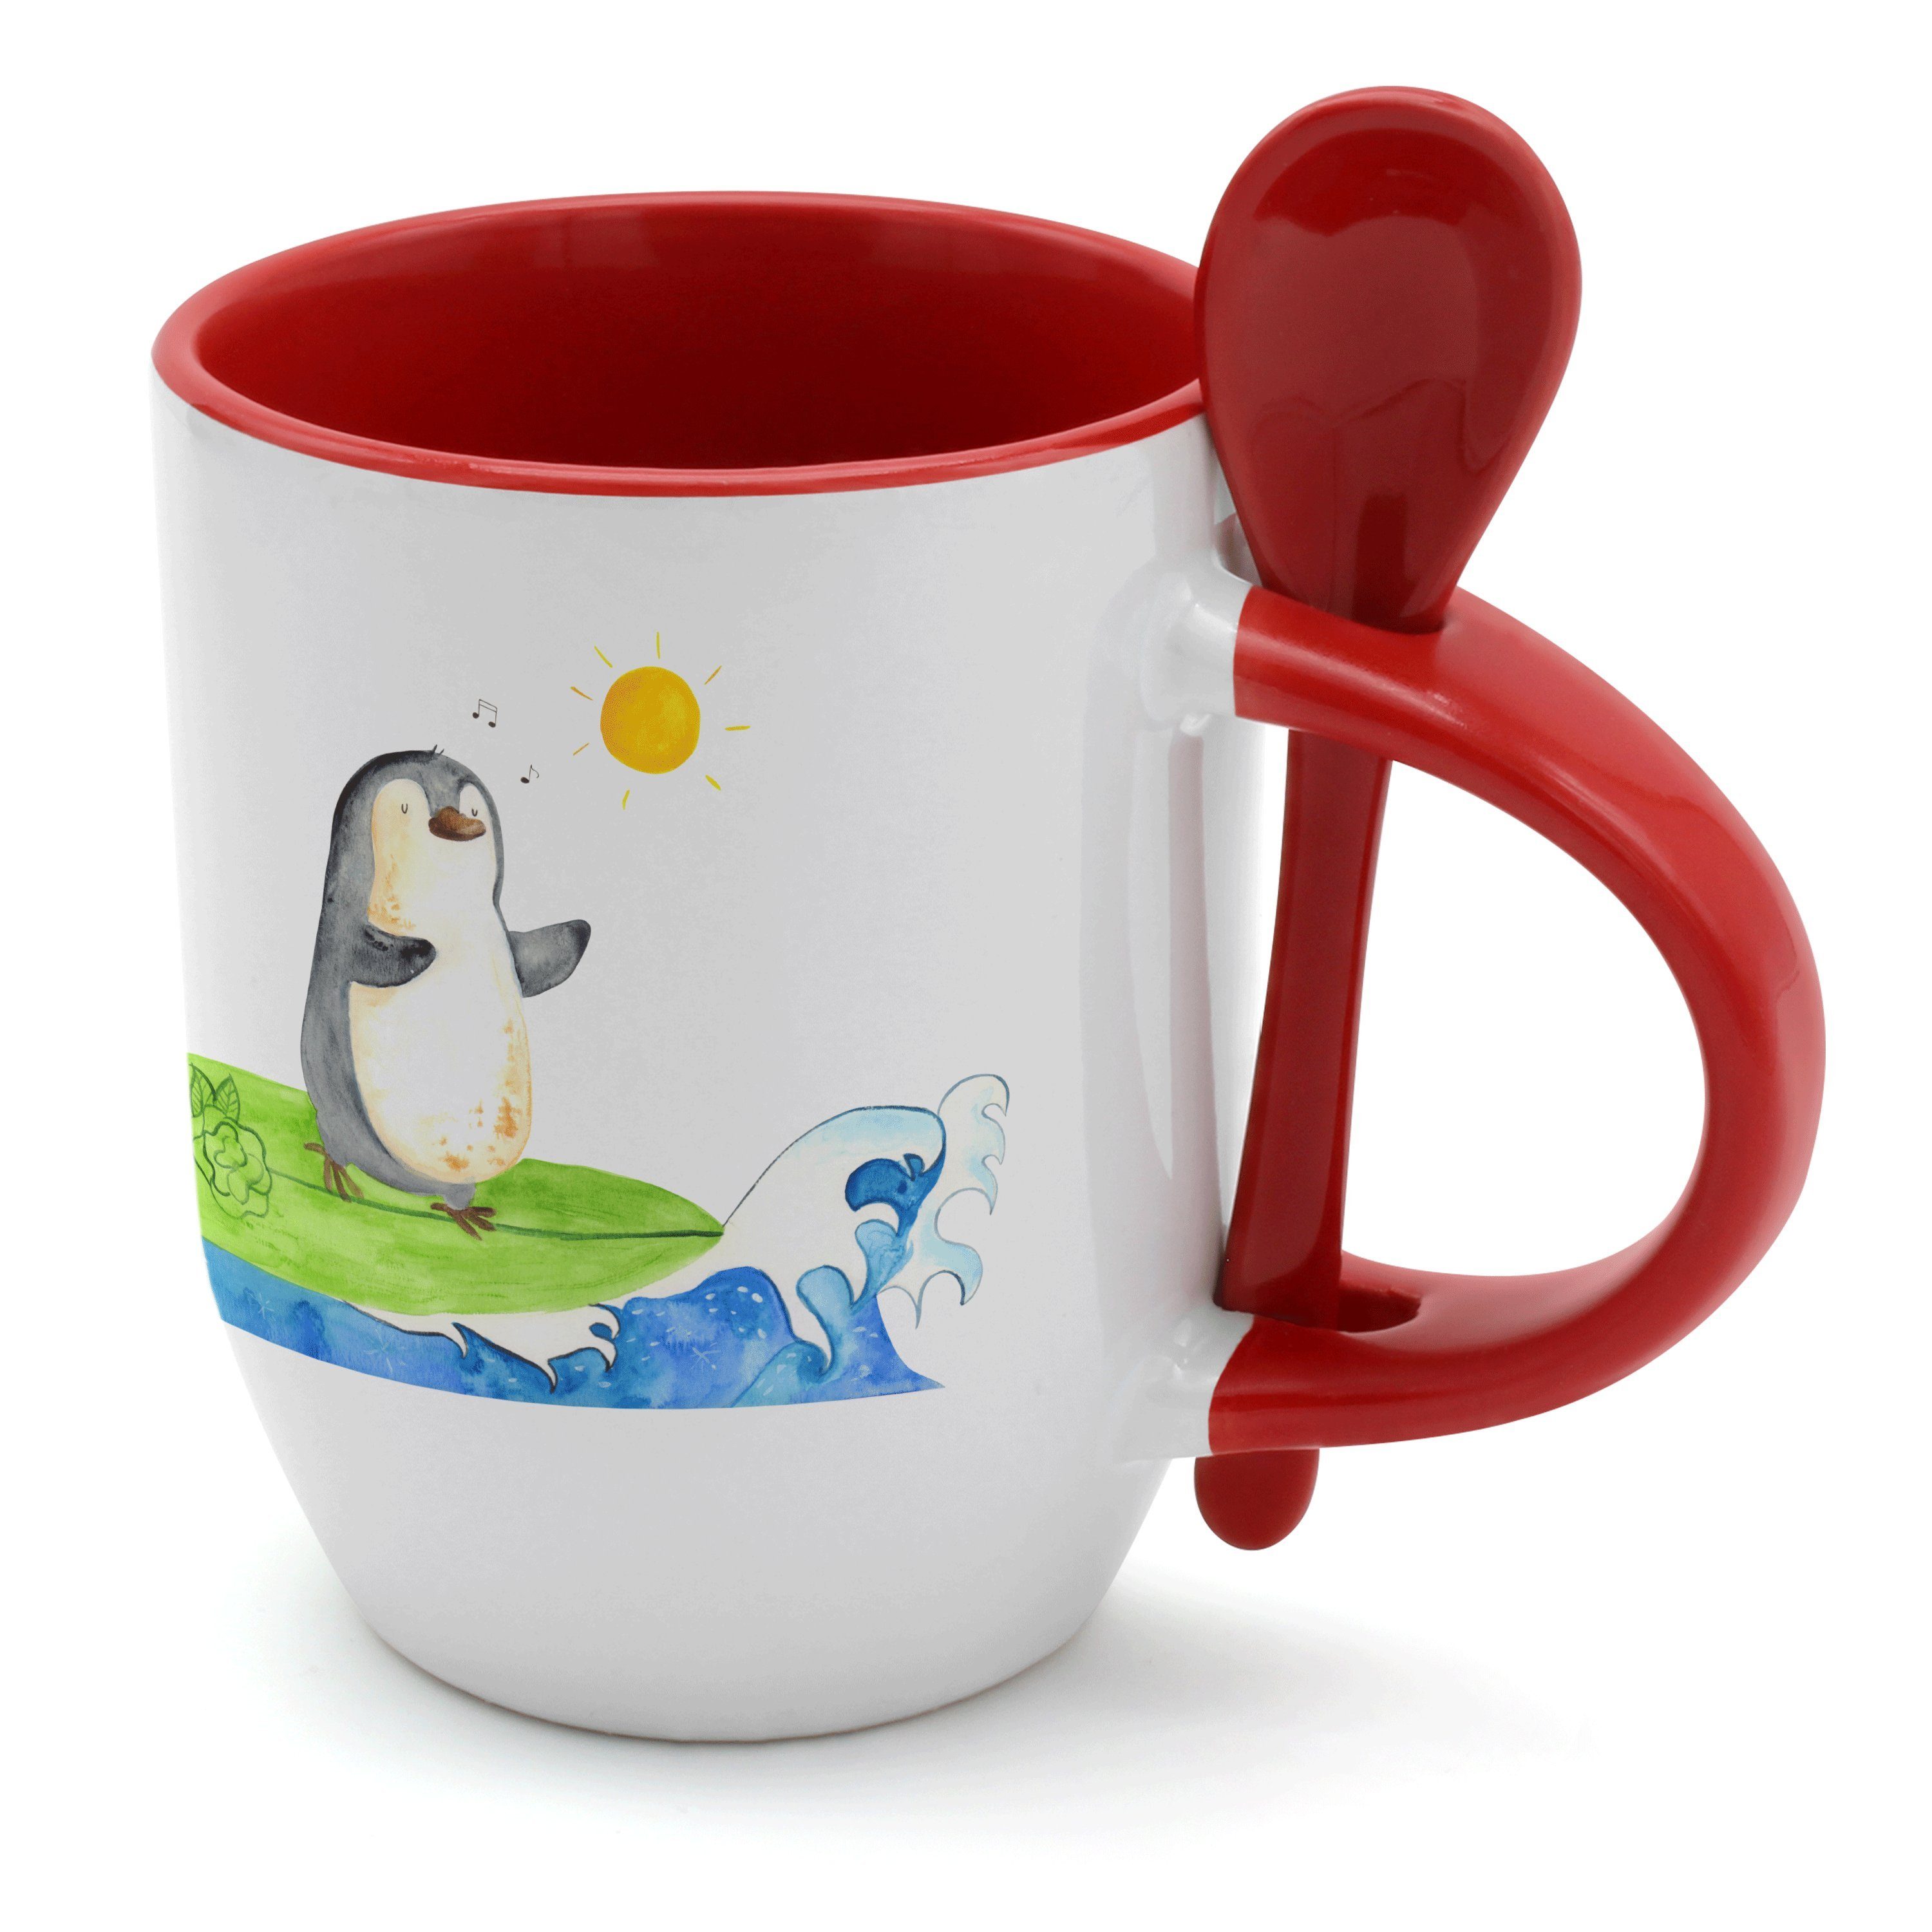 Mr. & Mrs. Panda Tasse Pinguin Surfer - Weiß - Geschenk, Wellen, Wellen reiten, Hawaii, Port, Keramik